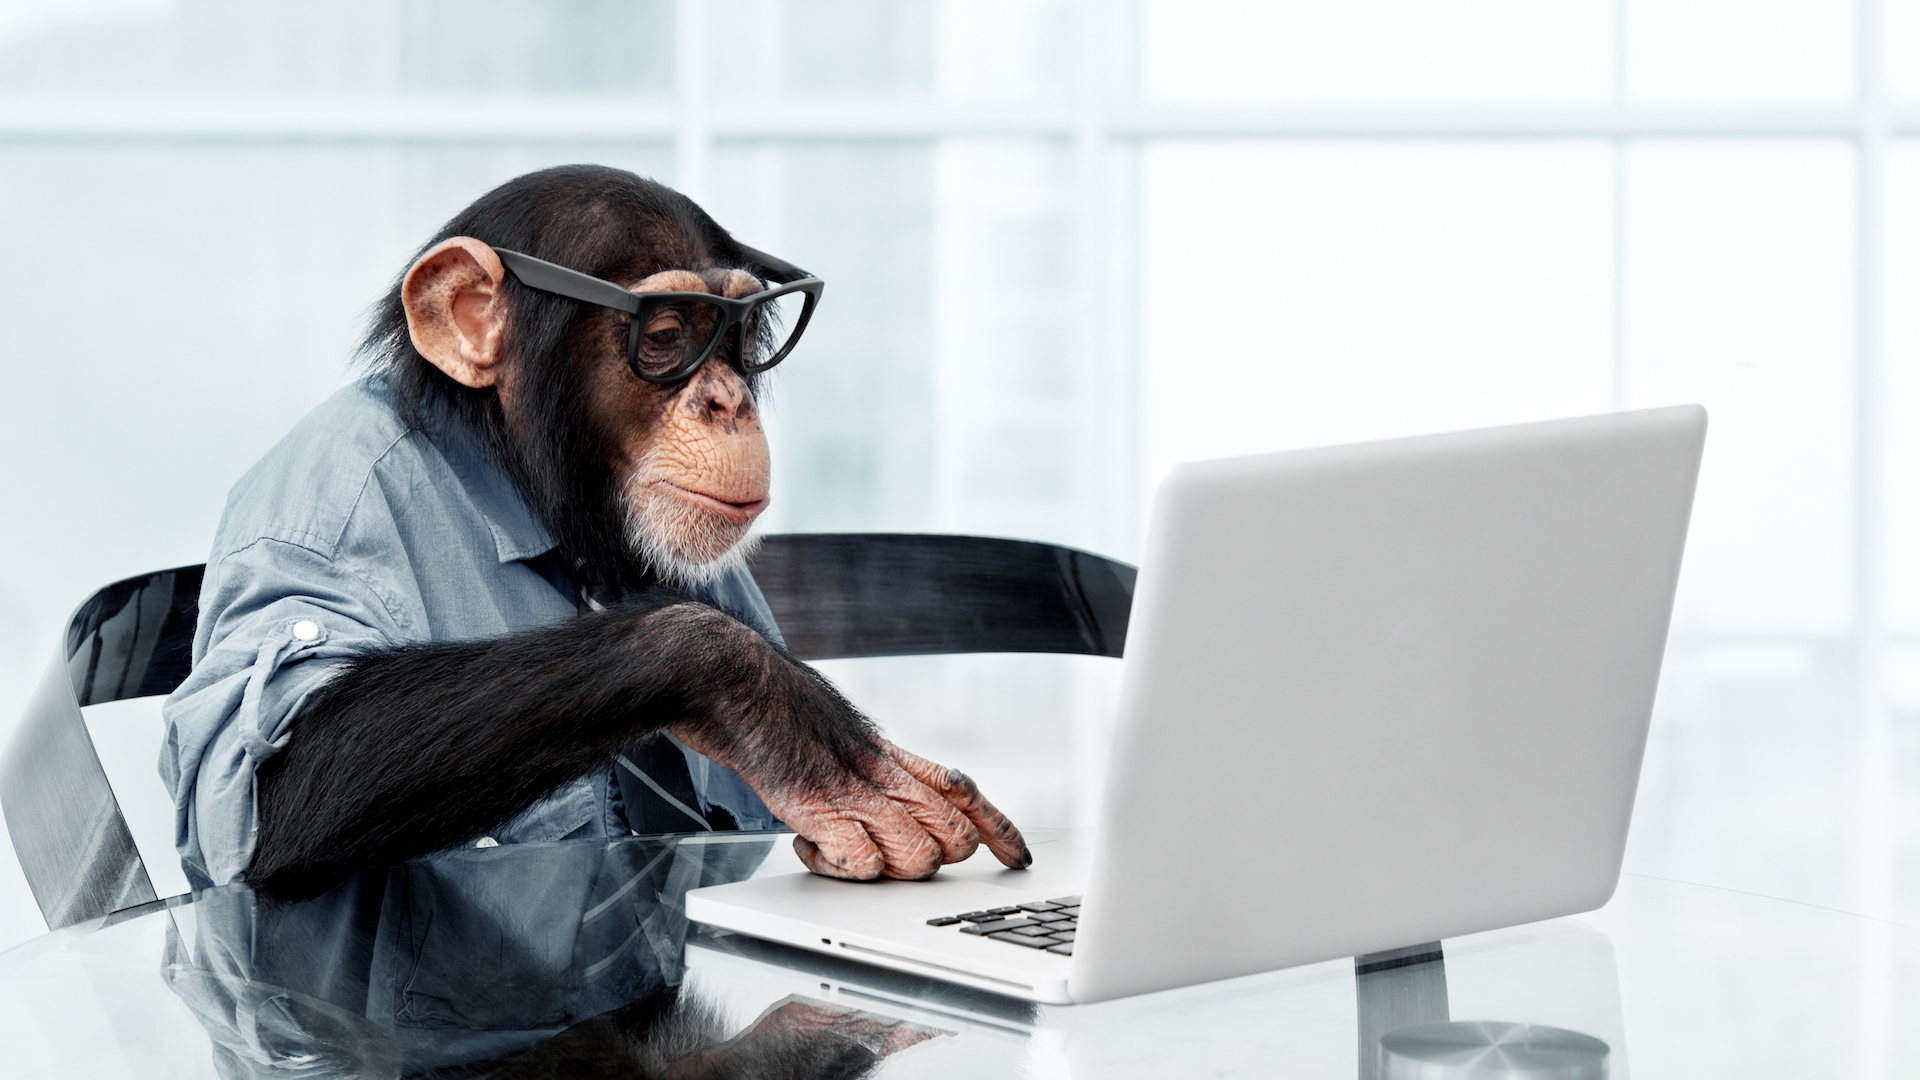 Monkey at a Computer